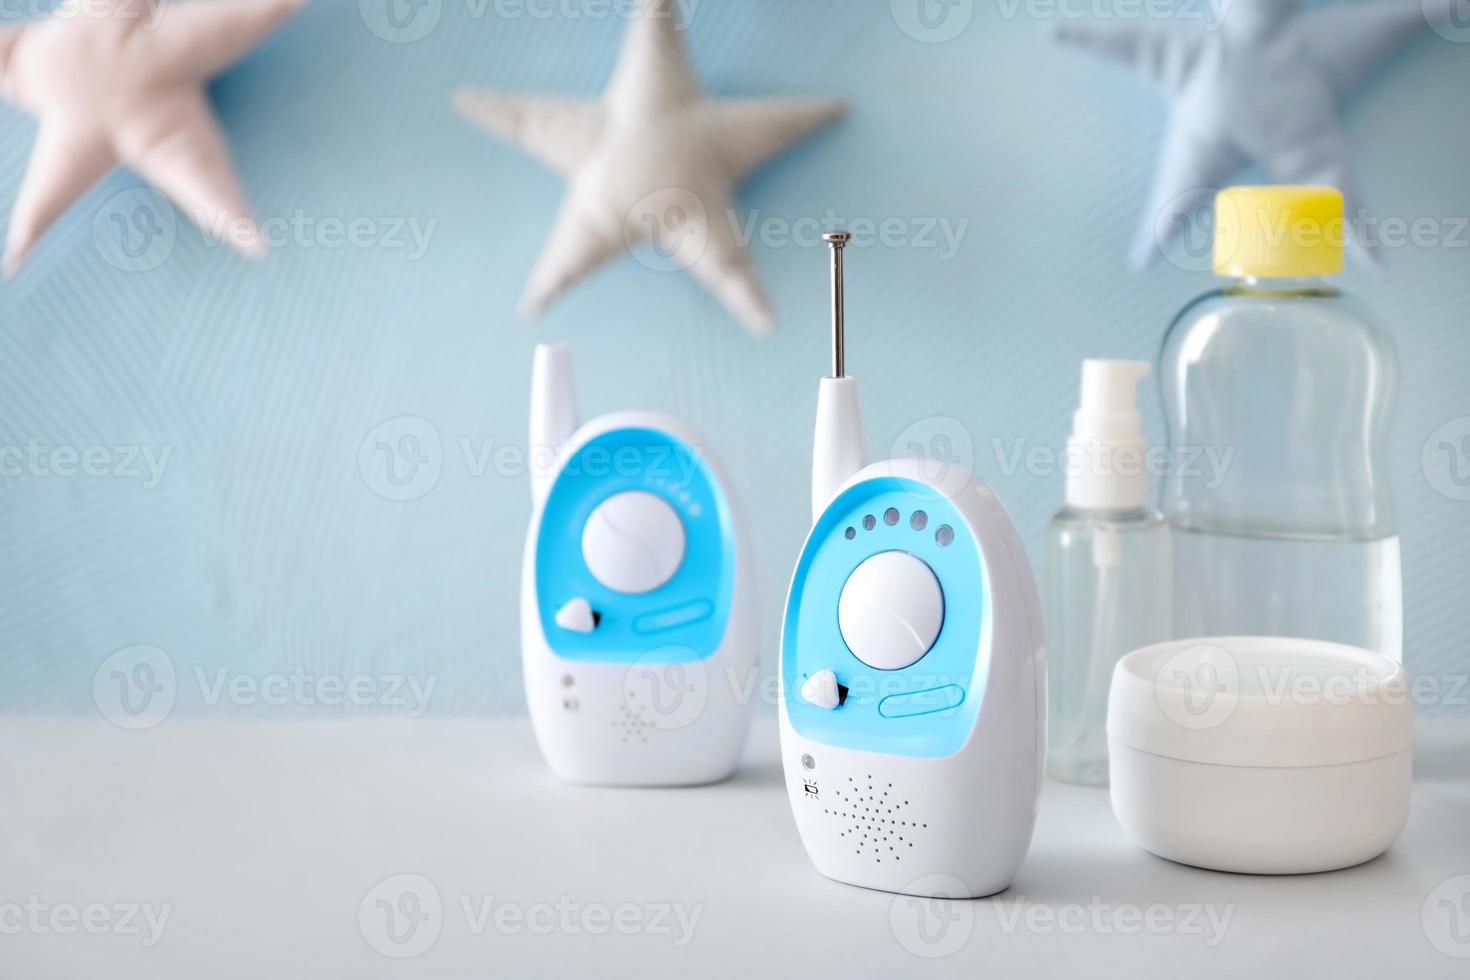 monitores de bebê e diferentes cosméticos na mesa foto